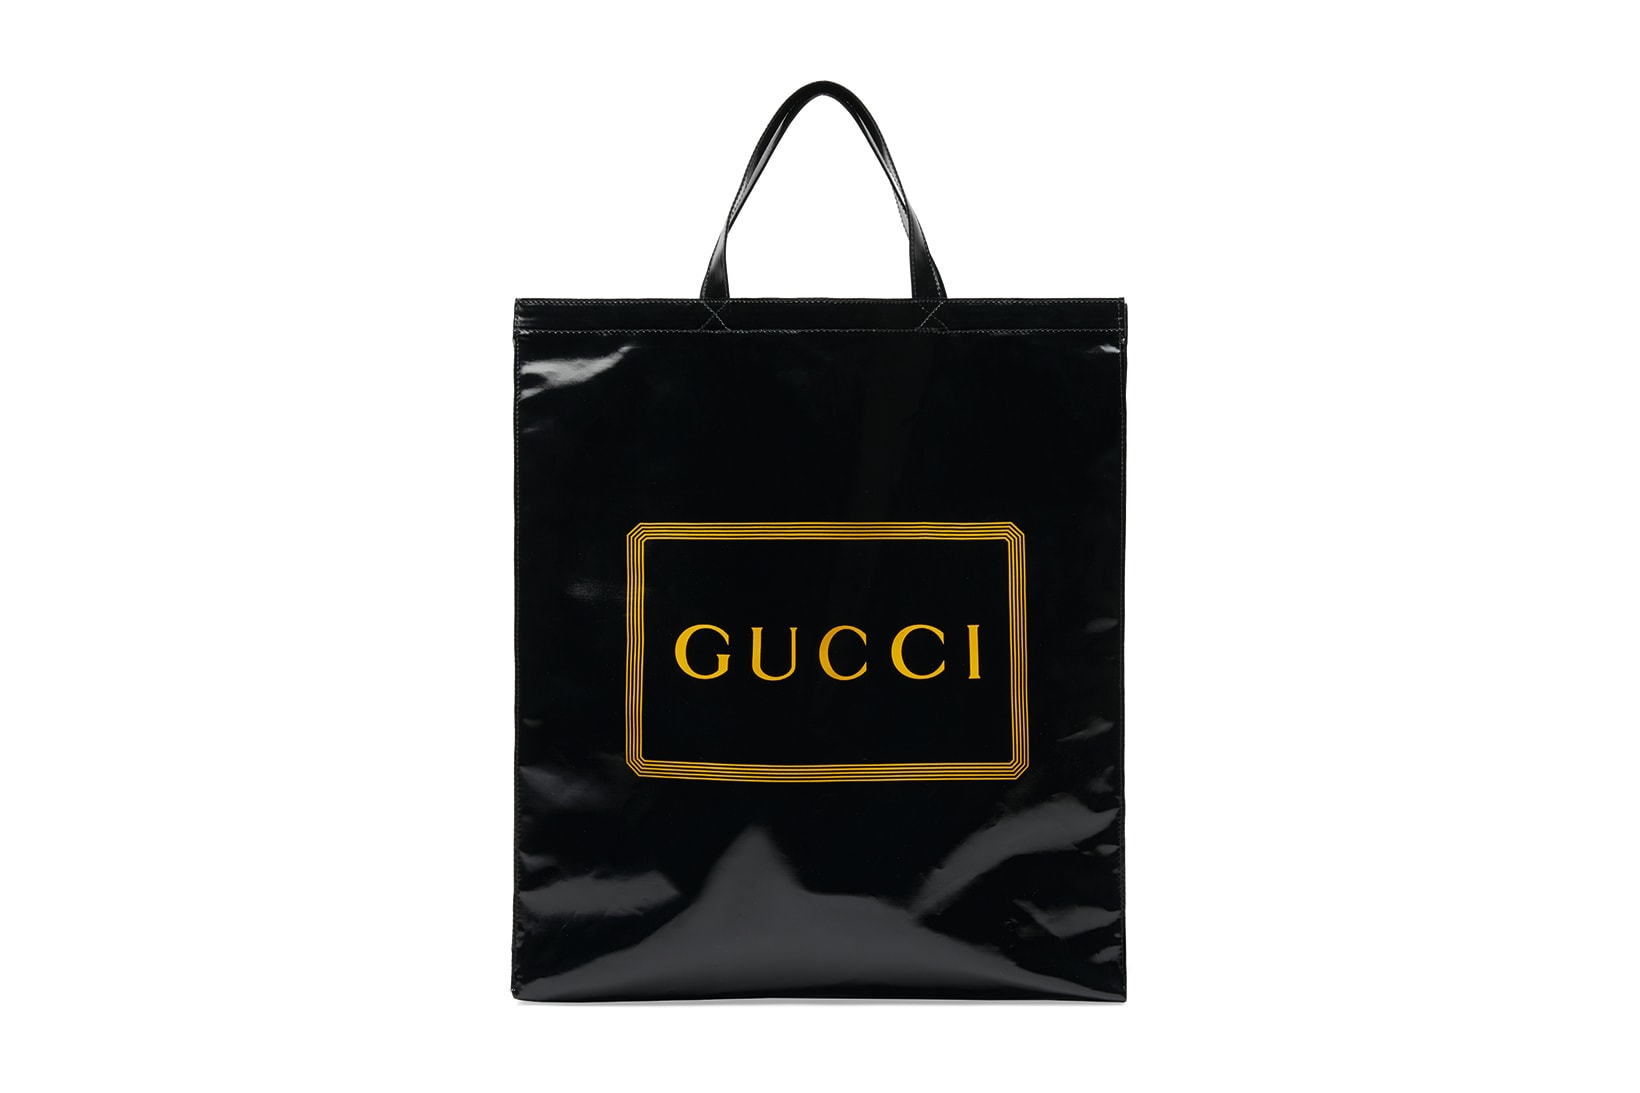 Gucci Shopper Tote Bags Floral Check Patterns Black Pink Logo